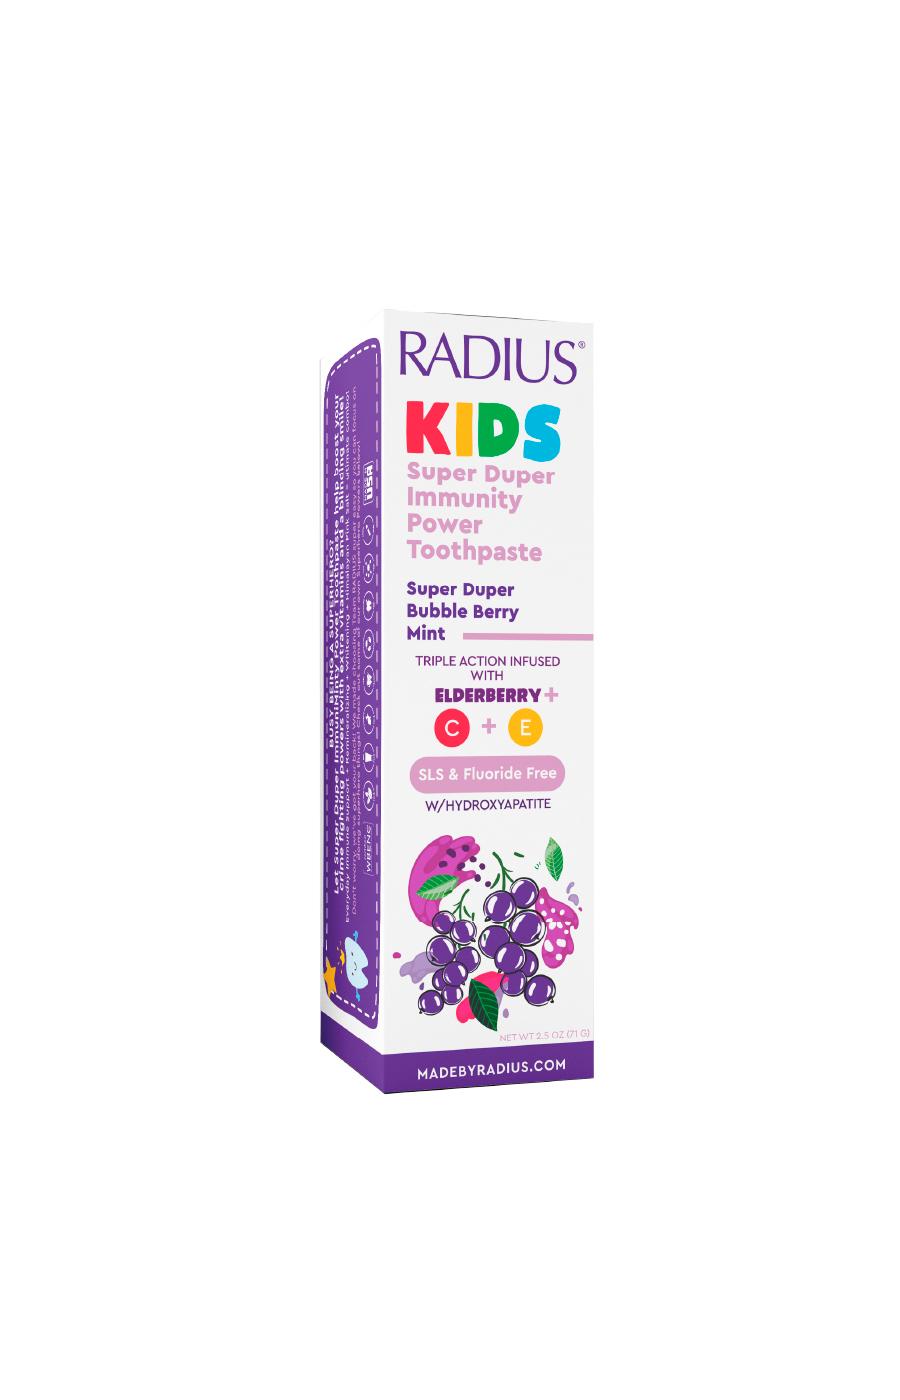 Radius Kids Immunity Power Toothpaste - Super Duper Bubble Berry Mint; image 1 of 3